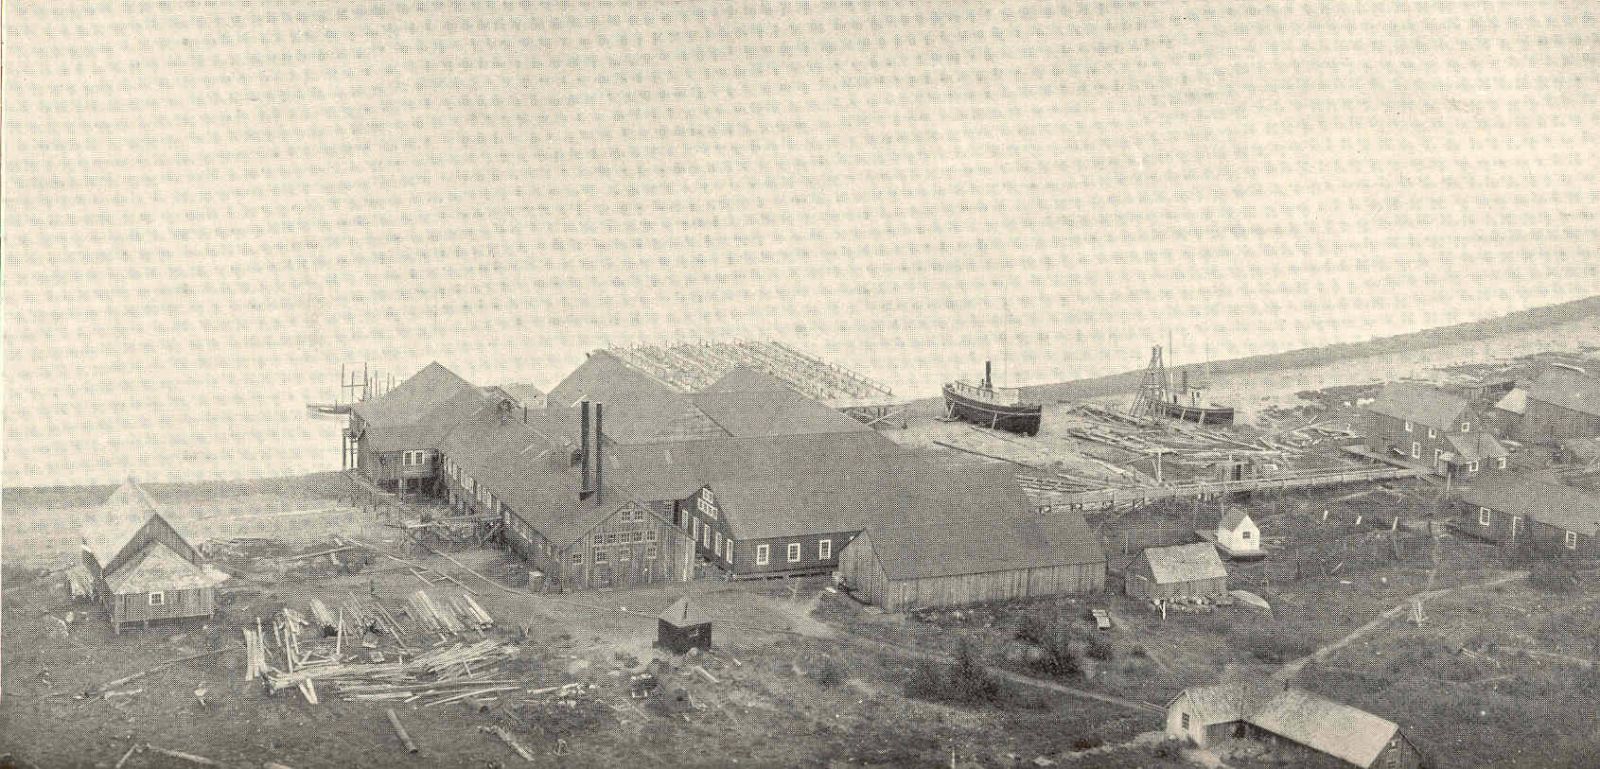 Alaska Packers Association Cannery At Pyramid Harbor - 1899